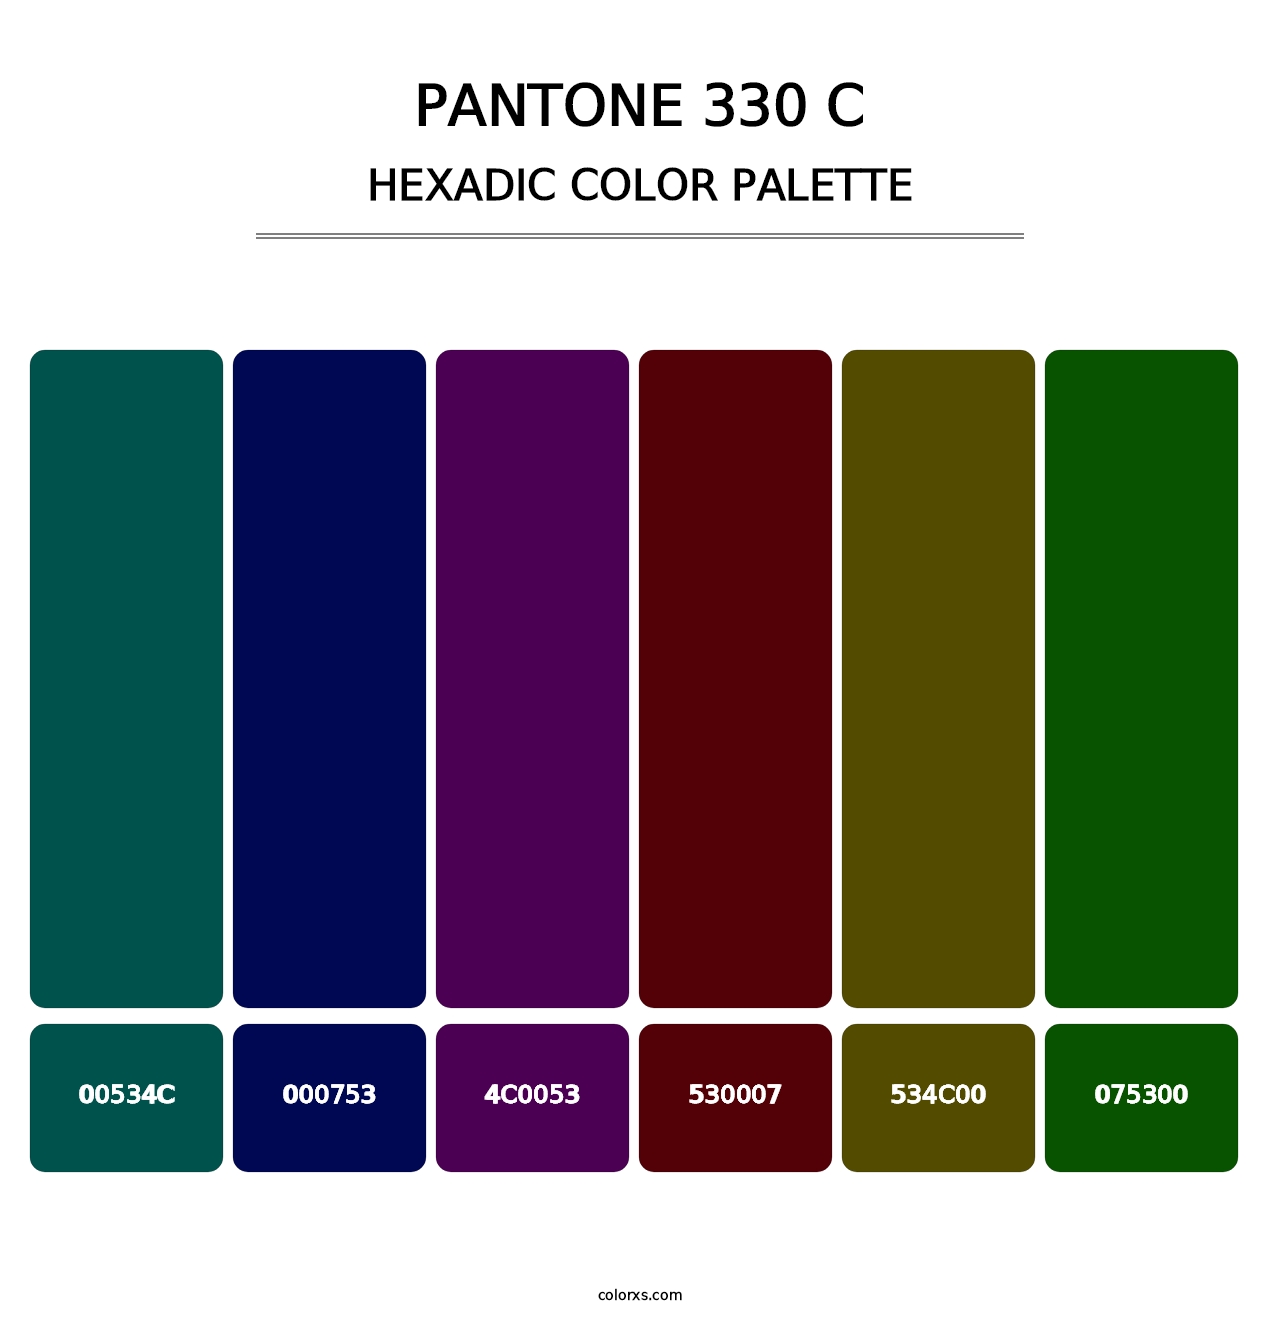 PANTONE 330 C - Hexadic Color Palette